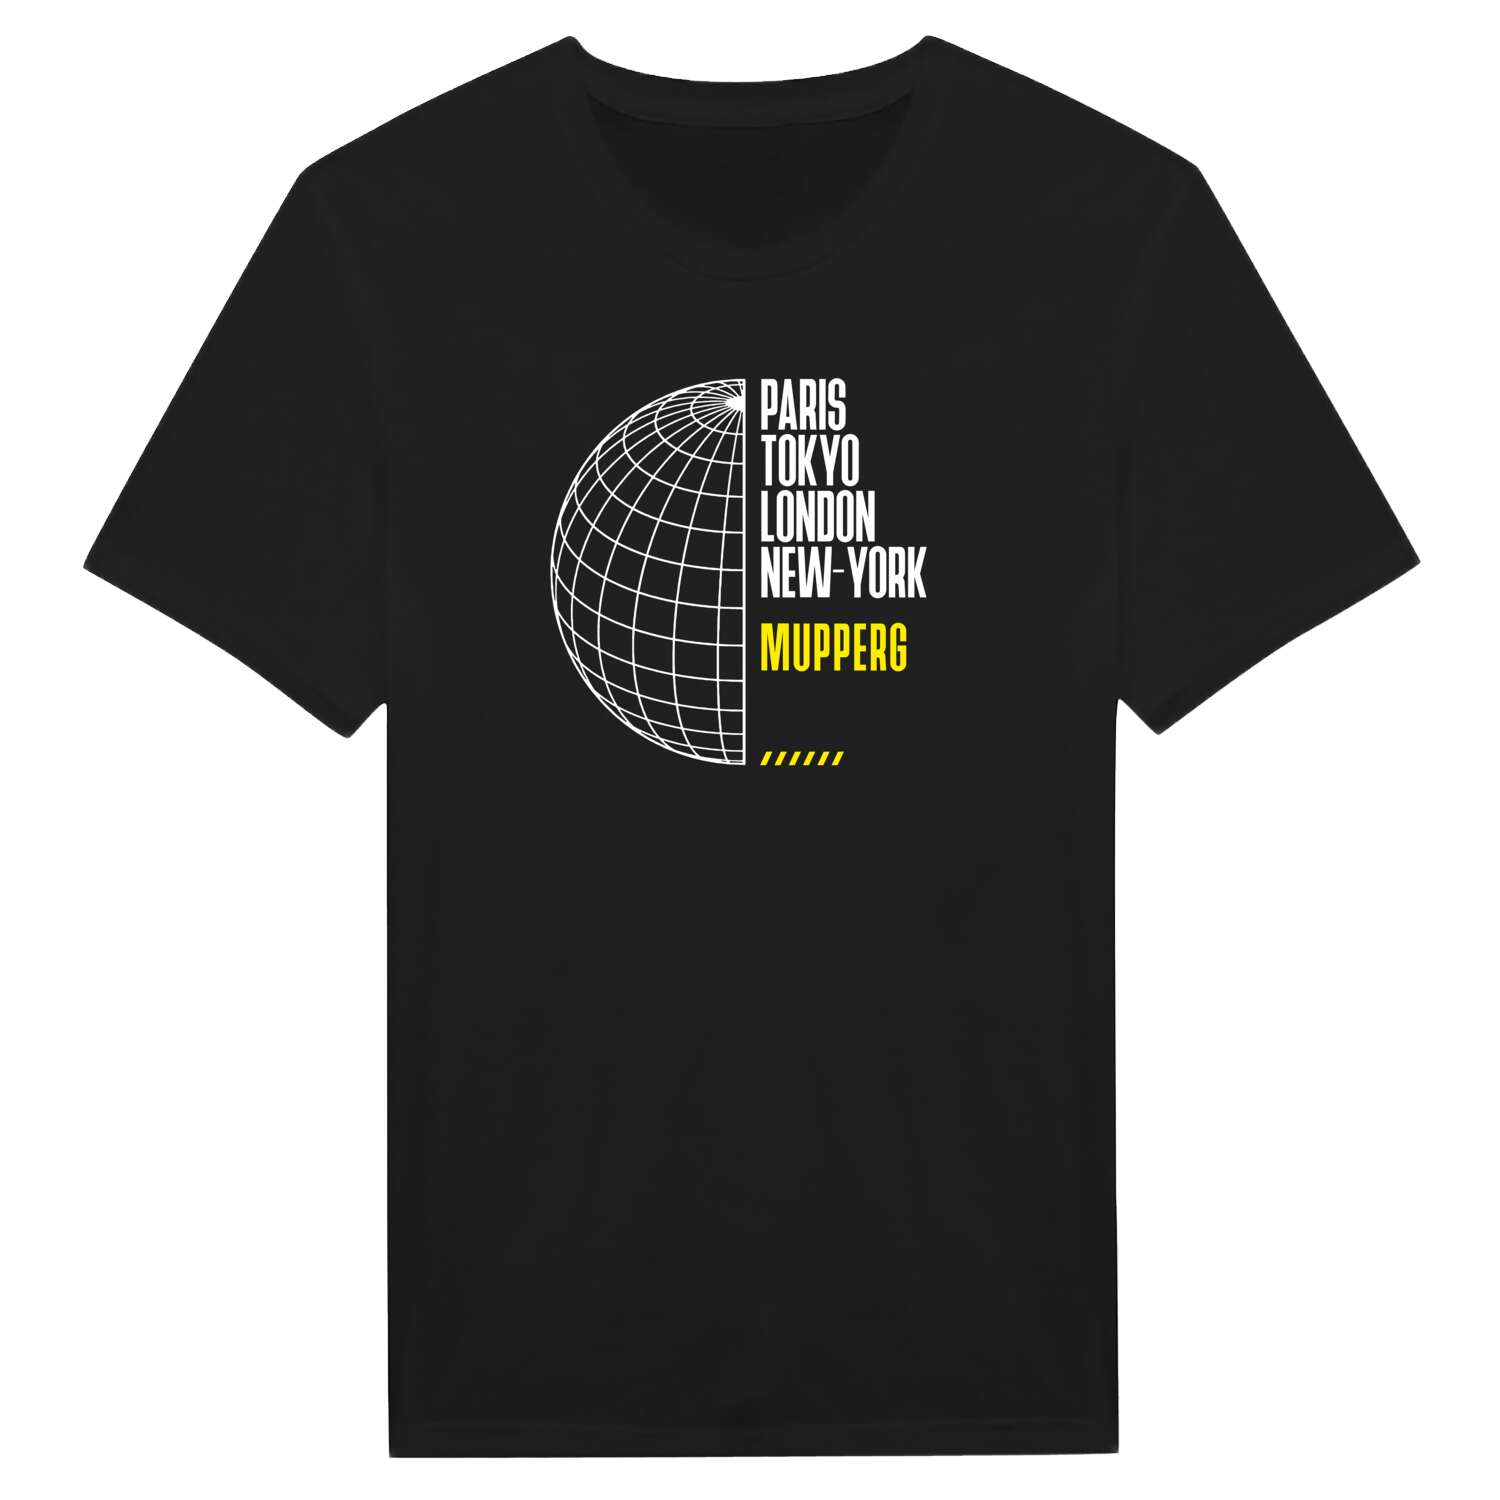 Mupperg T-Shirt »Paris Tokyo London«